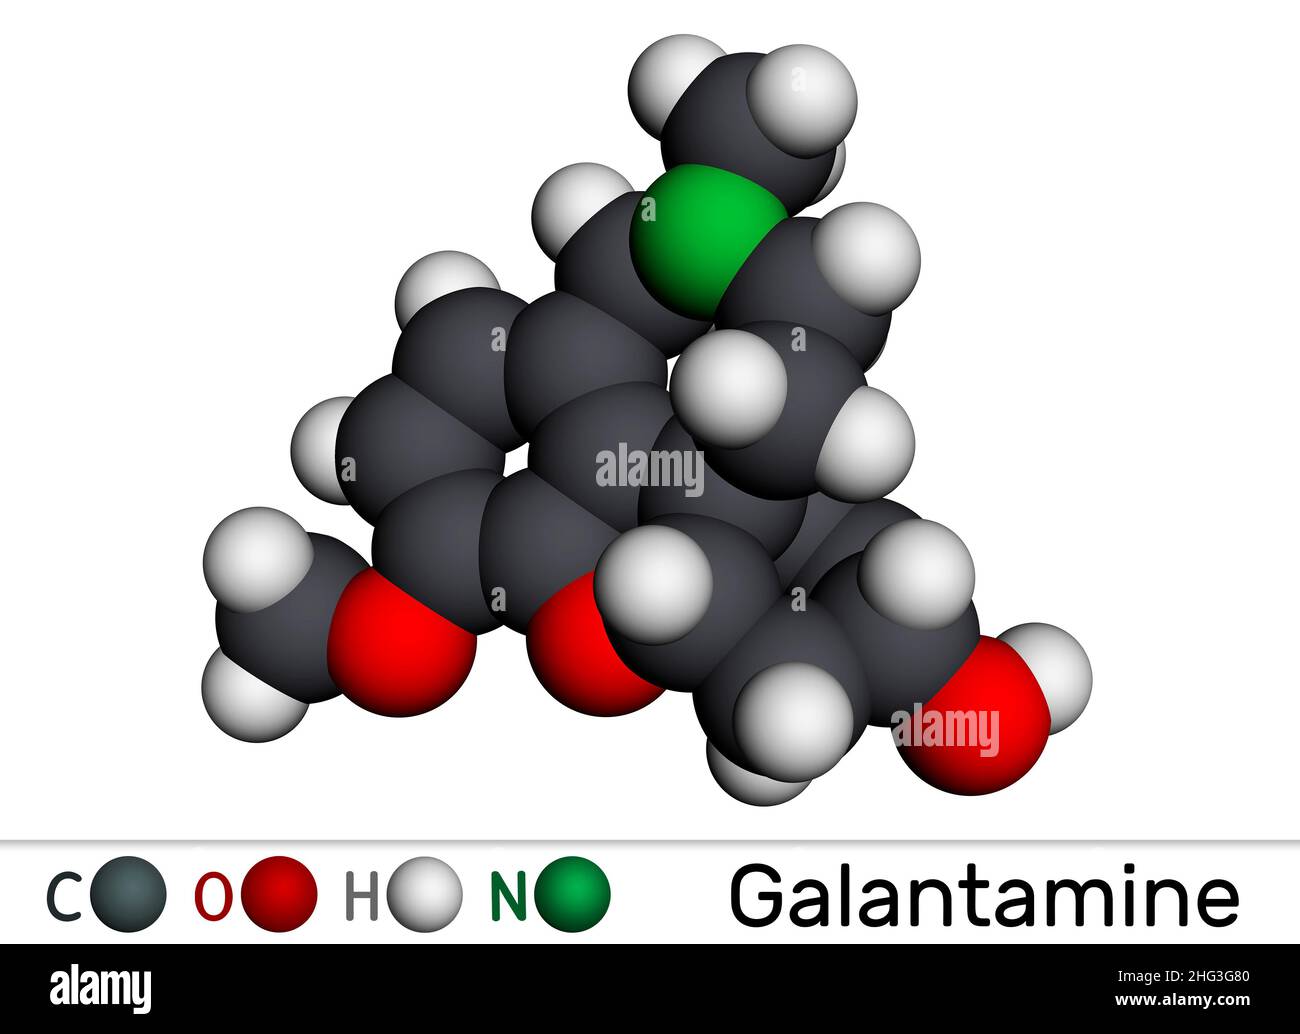 Galantamine, molecule. It is tertiary alkaloid, used to trate dementia, Alzheimer's disease. Molecular model. 3D rendering. Illustration Stock Photo